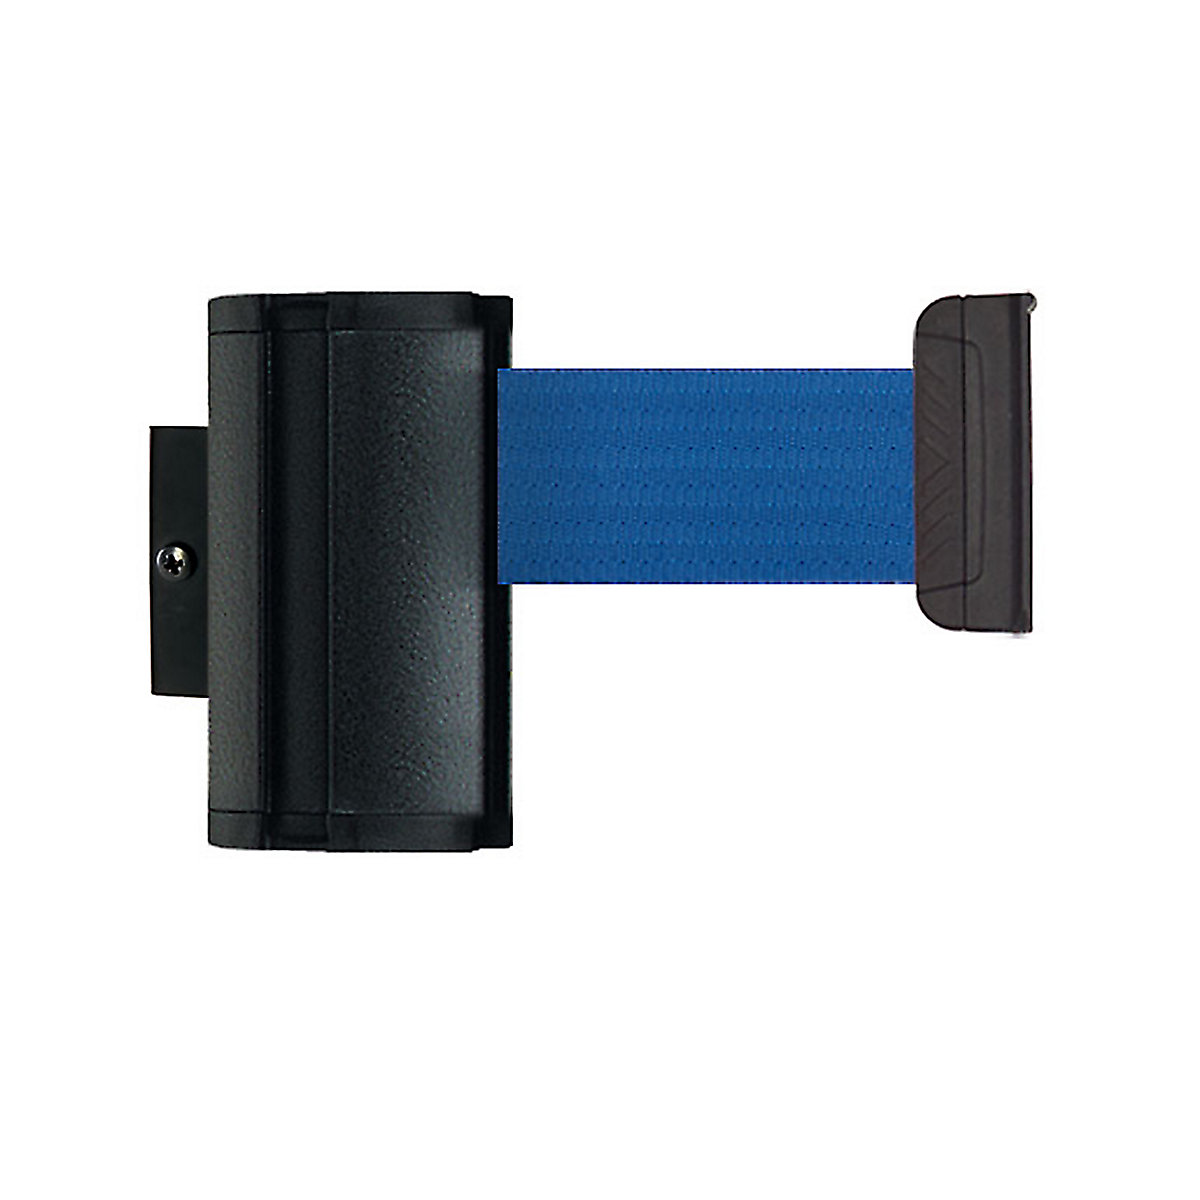 Bandcassette Wall Mount, uittreklengte max. 2300 mm, bandkleur blauw